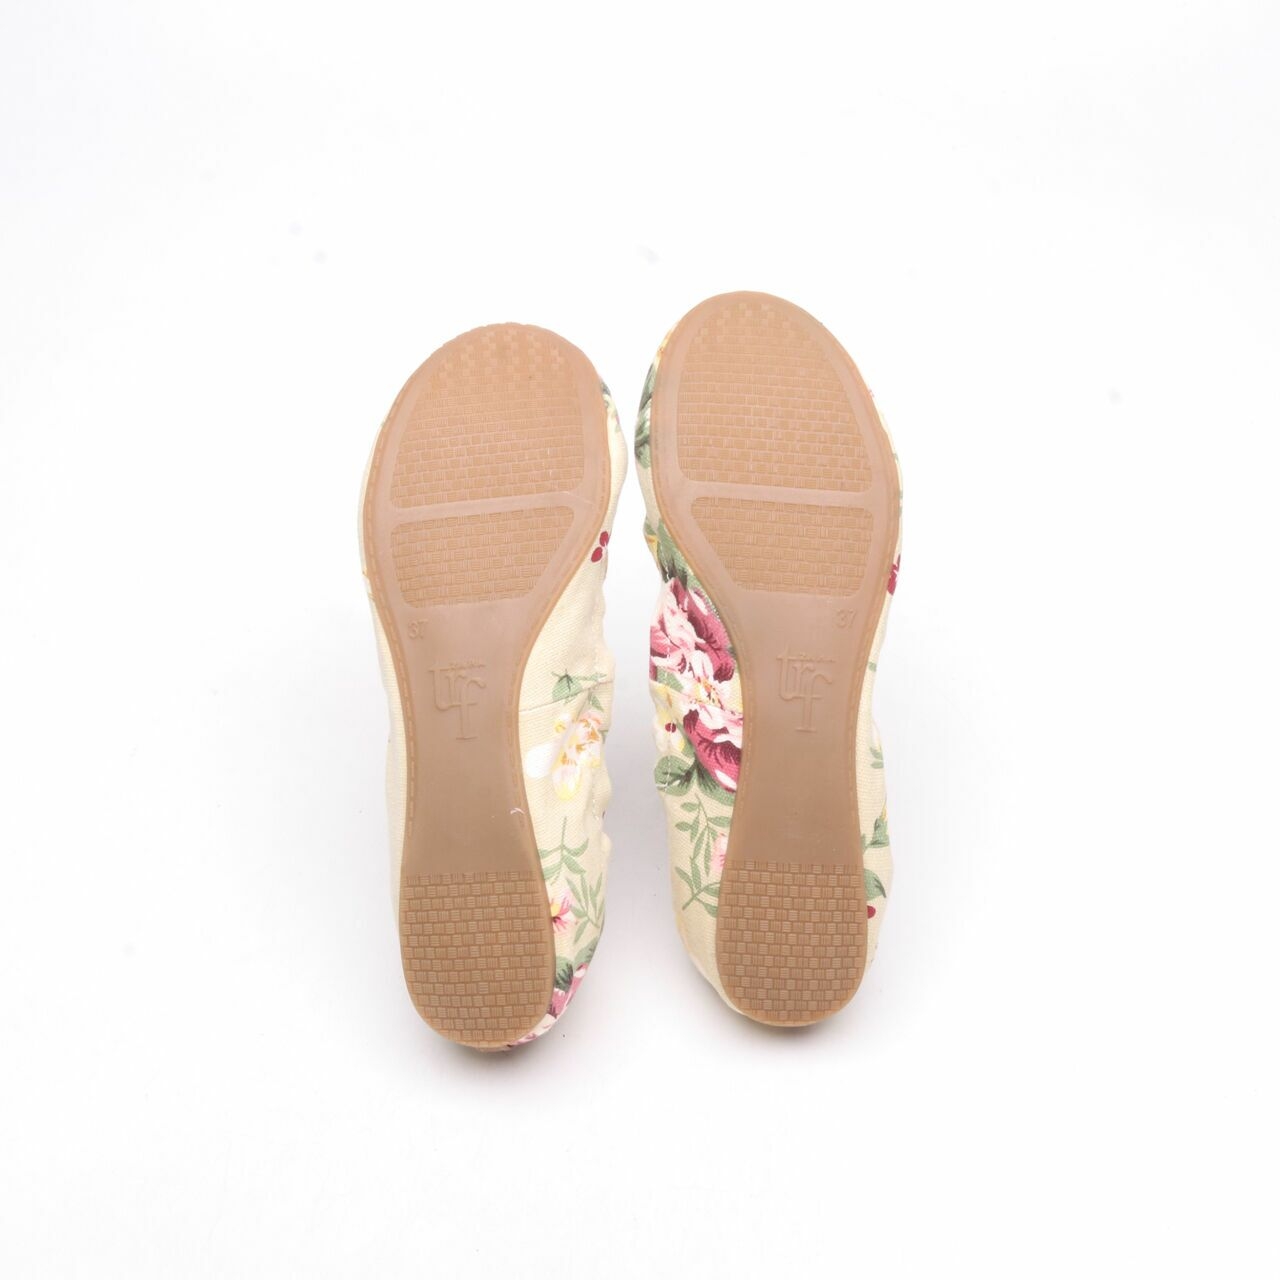 Zara Cream Floral Flats Shoes